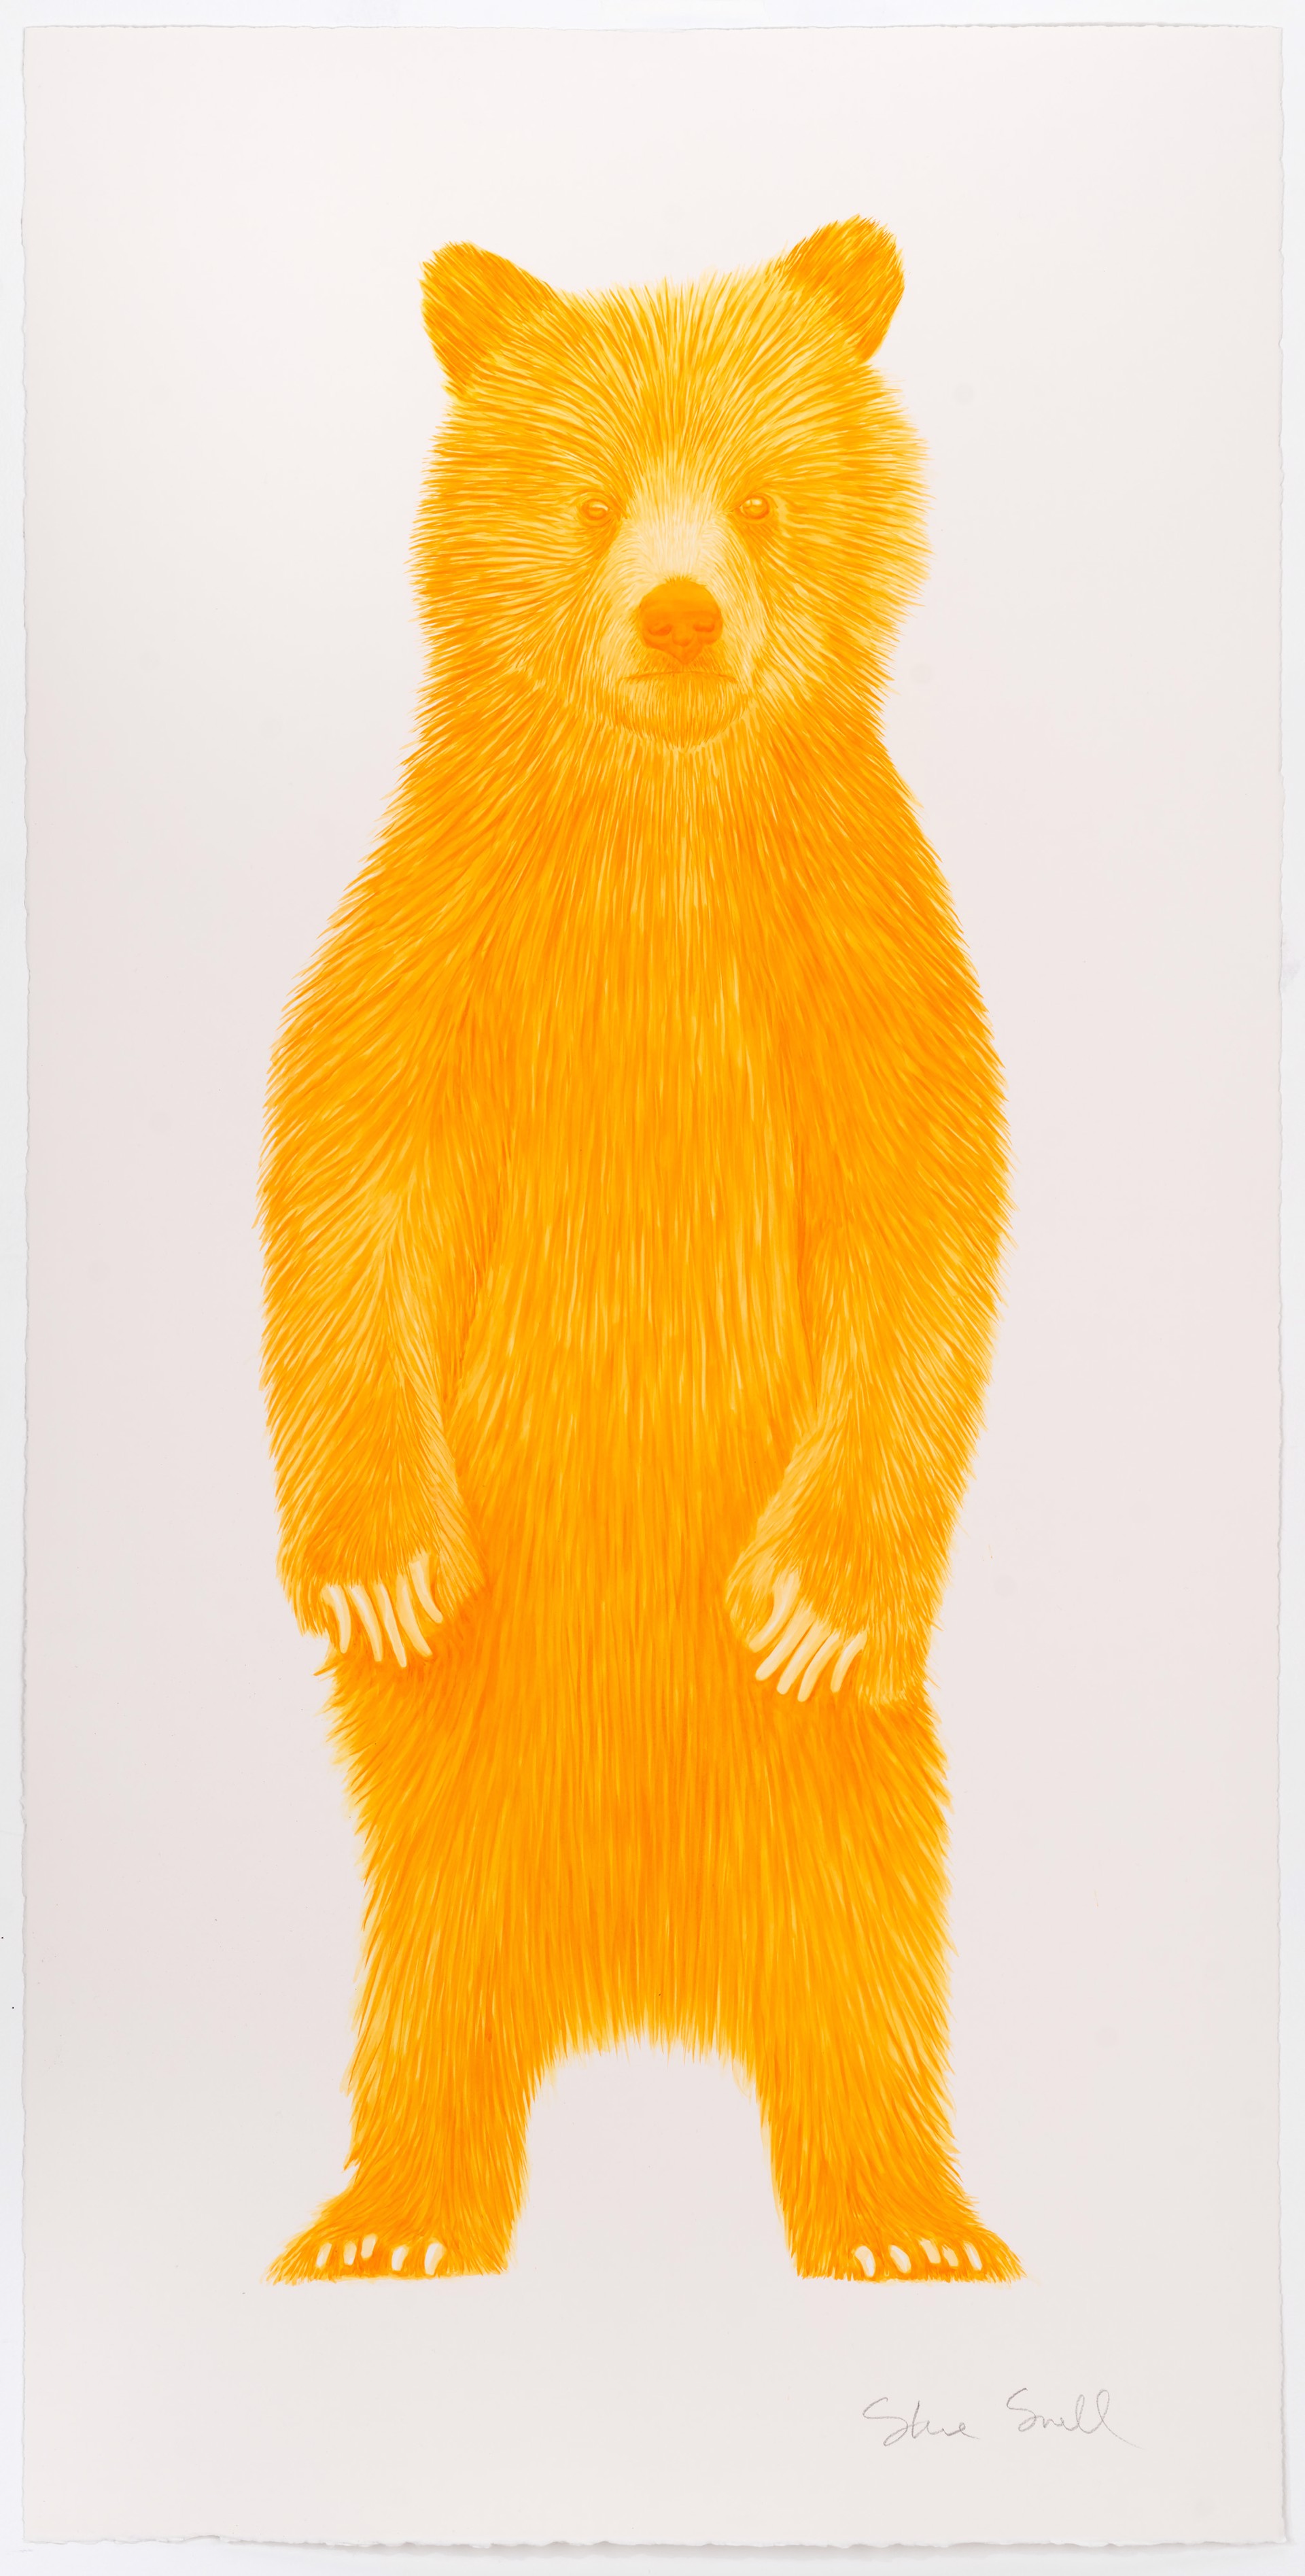 Golden Cub by Steve Snell